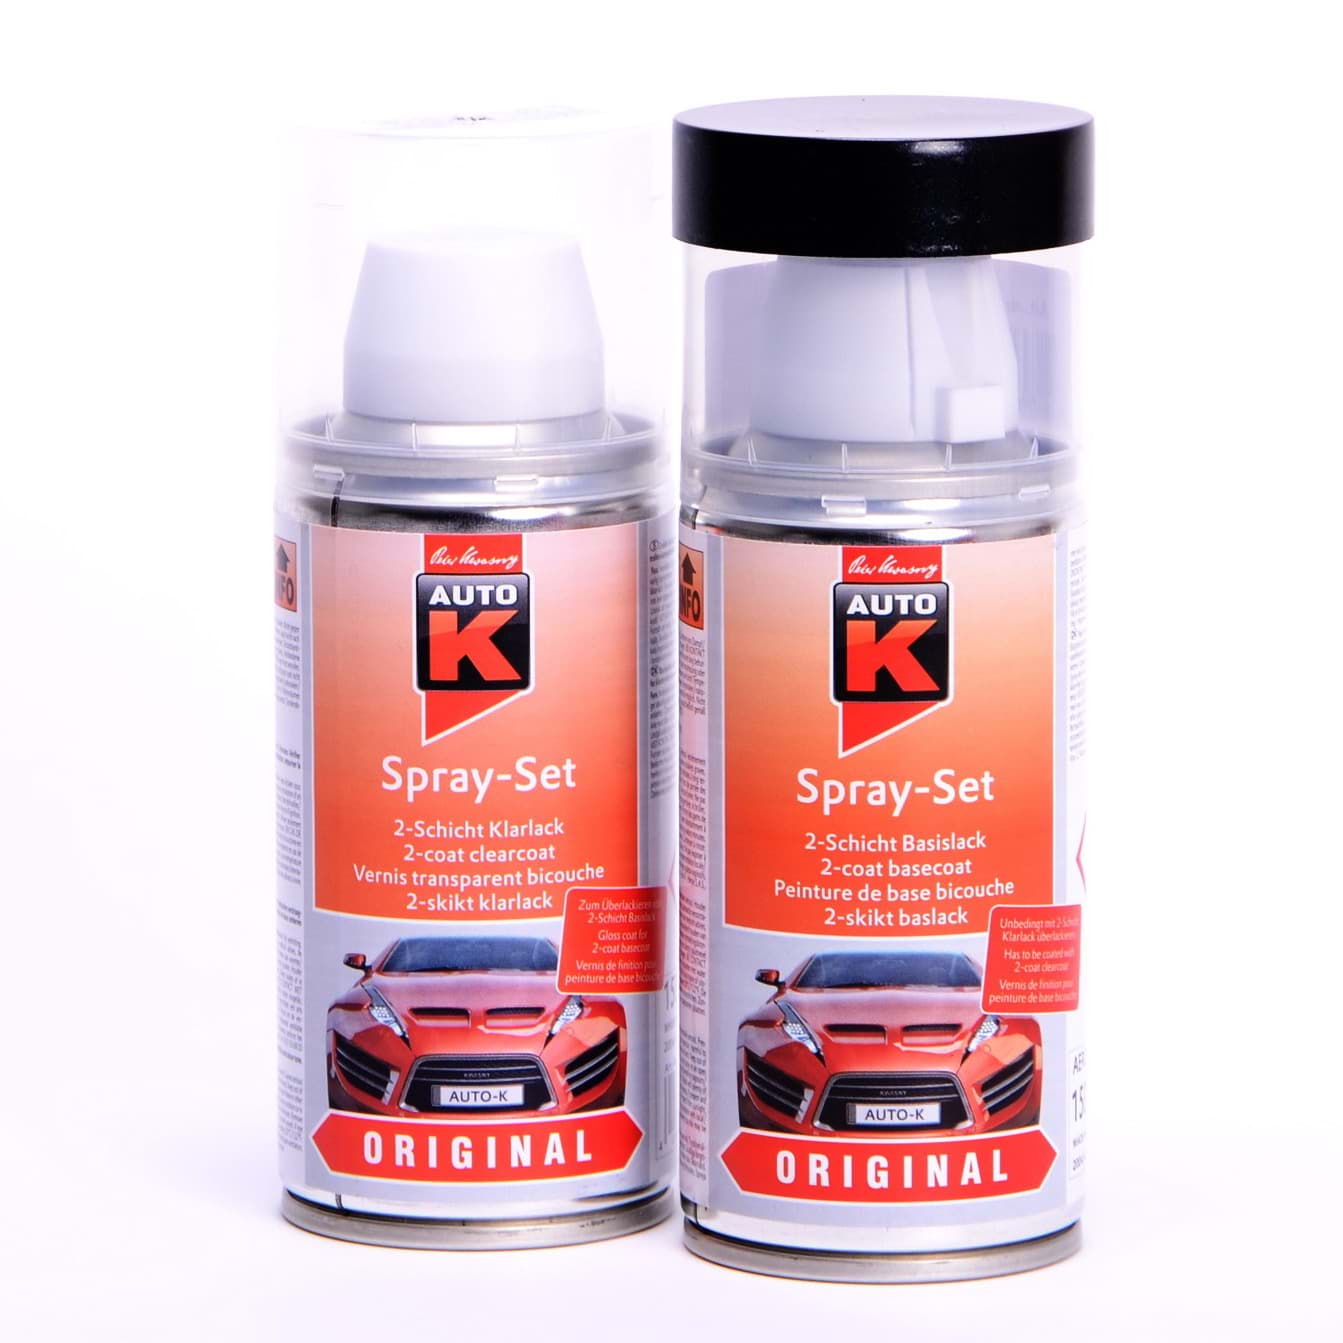 Auto-K Spray-Set Autolack für Opel 259 Halitblau 21325 resmi